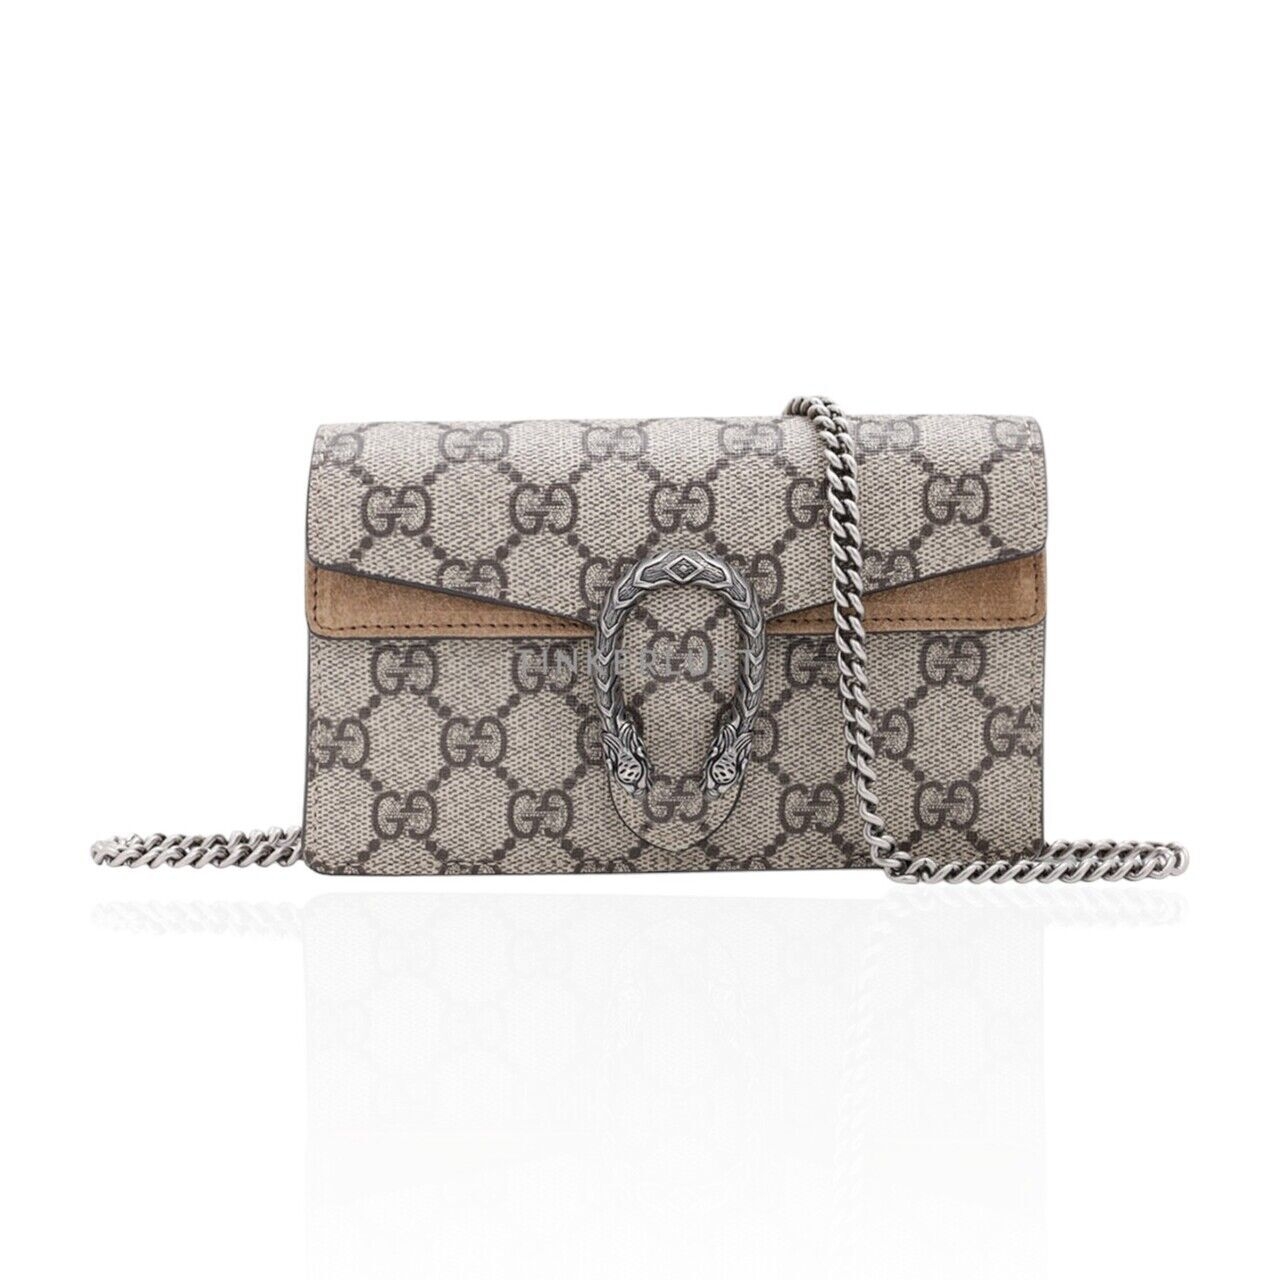 Gucci Super Mini GG Supreme Dionysus Chain in Beige/Taupe Shoulder Bag